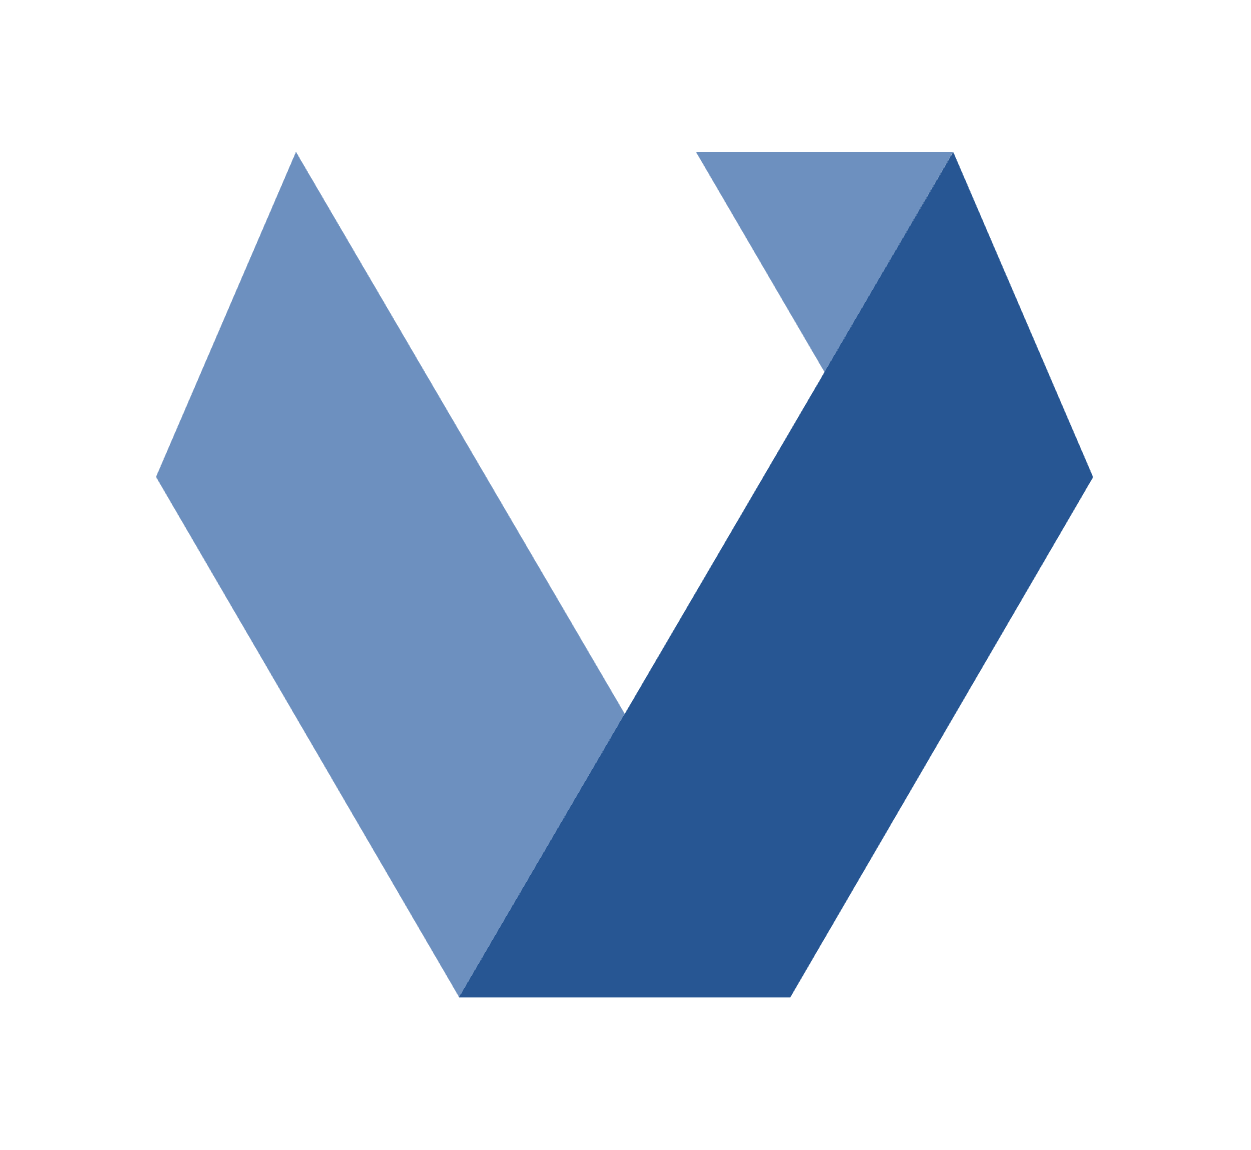 VERITONE Logo for active job listings